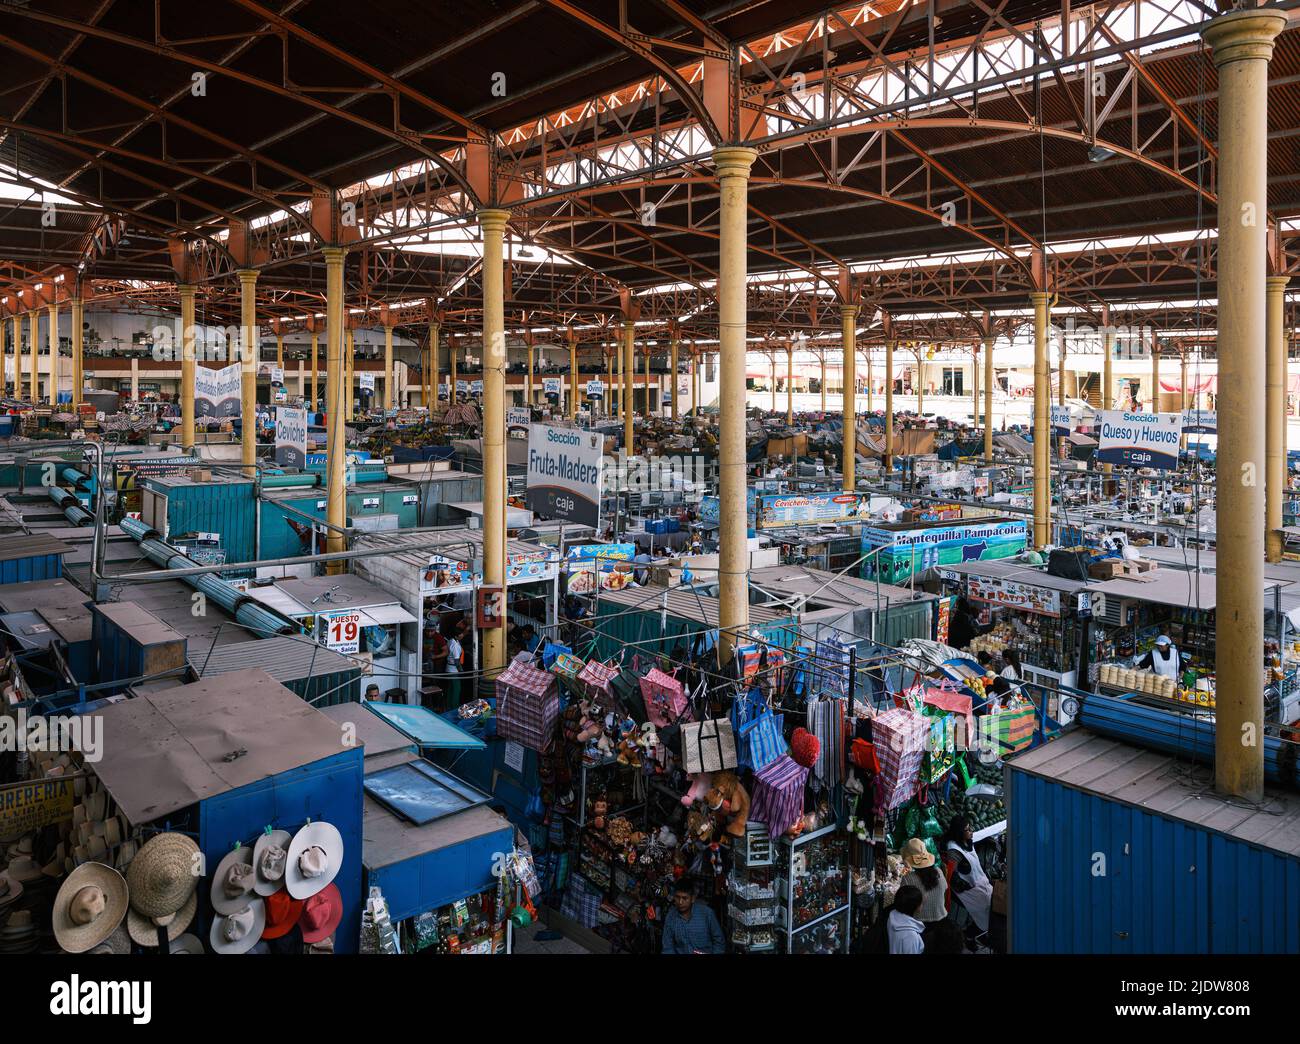 AREQUIPA, PERU - CIRCA SEPTEMBER 2019: Interior view of the San Camilo market in Arequipa. Stock Photo